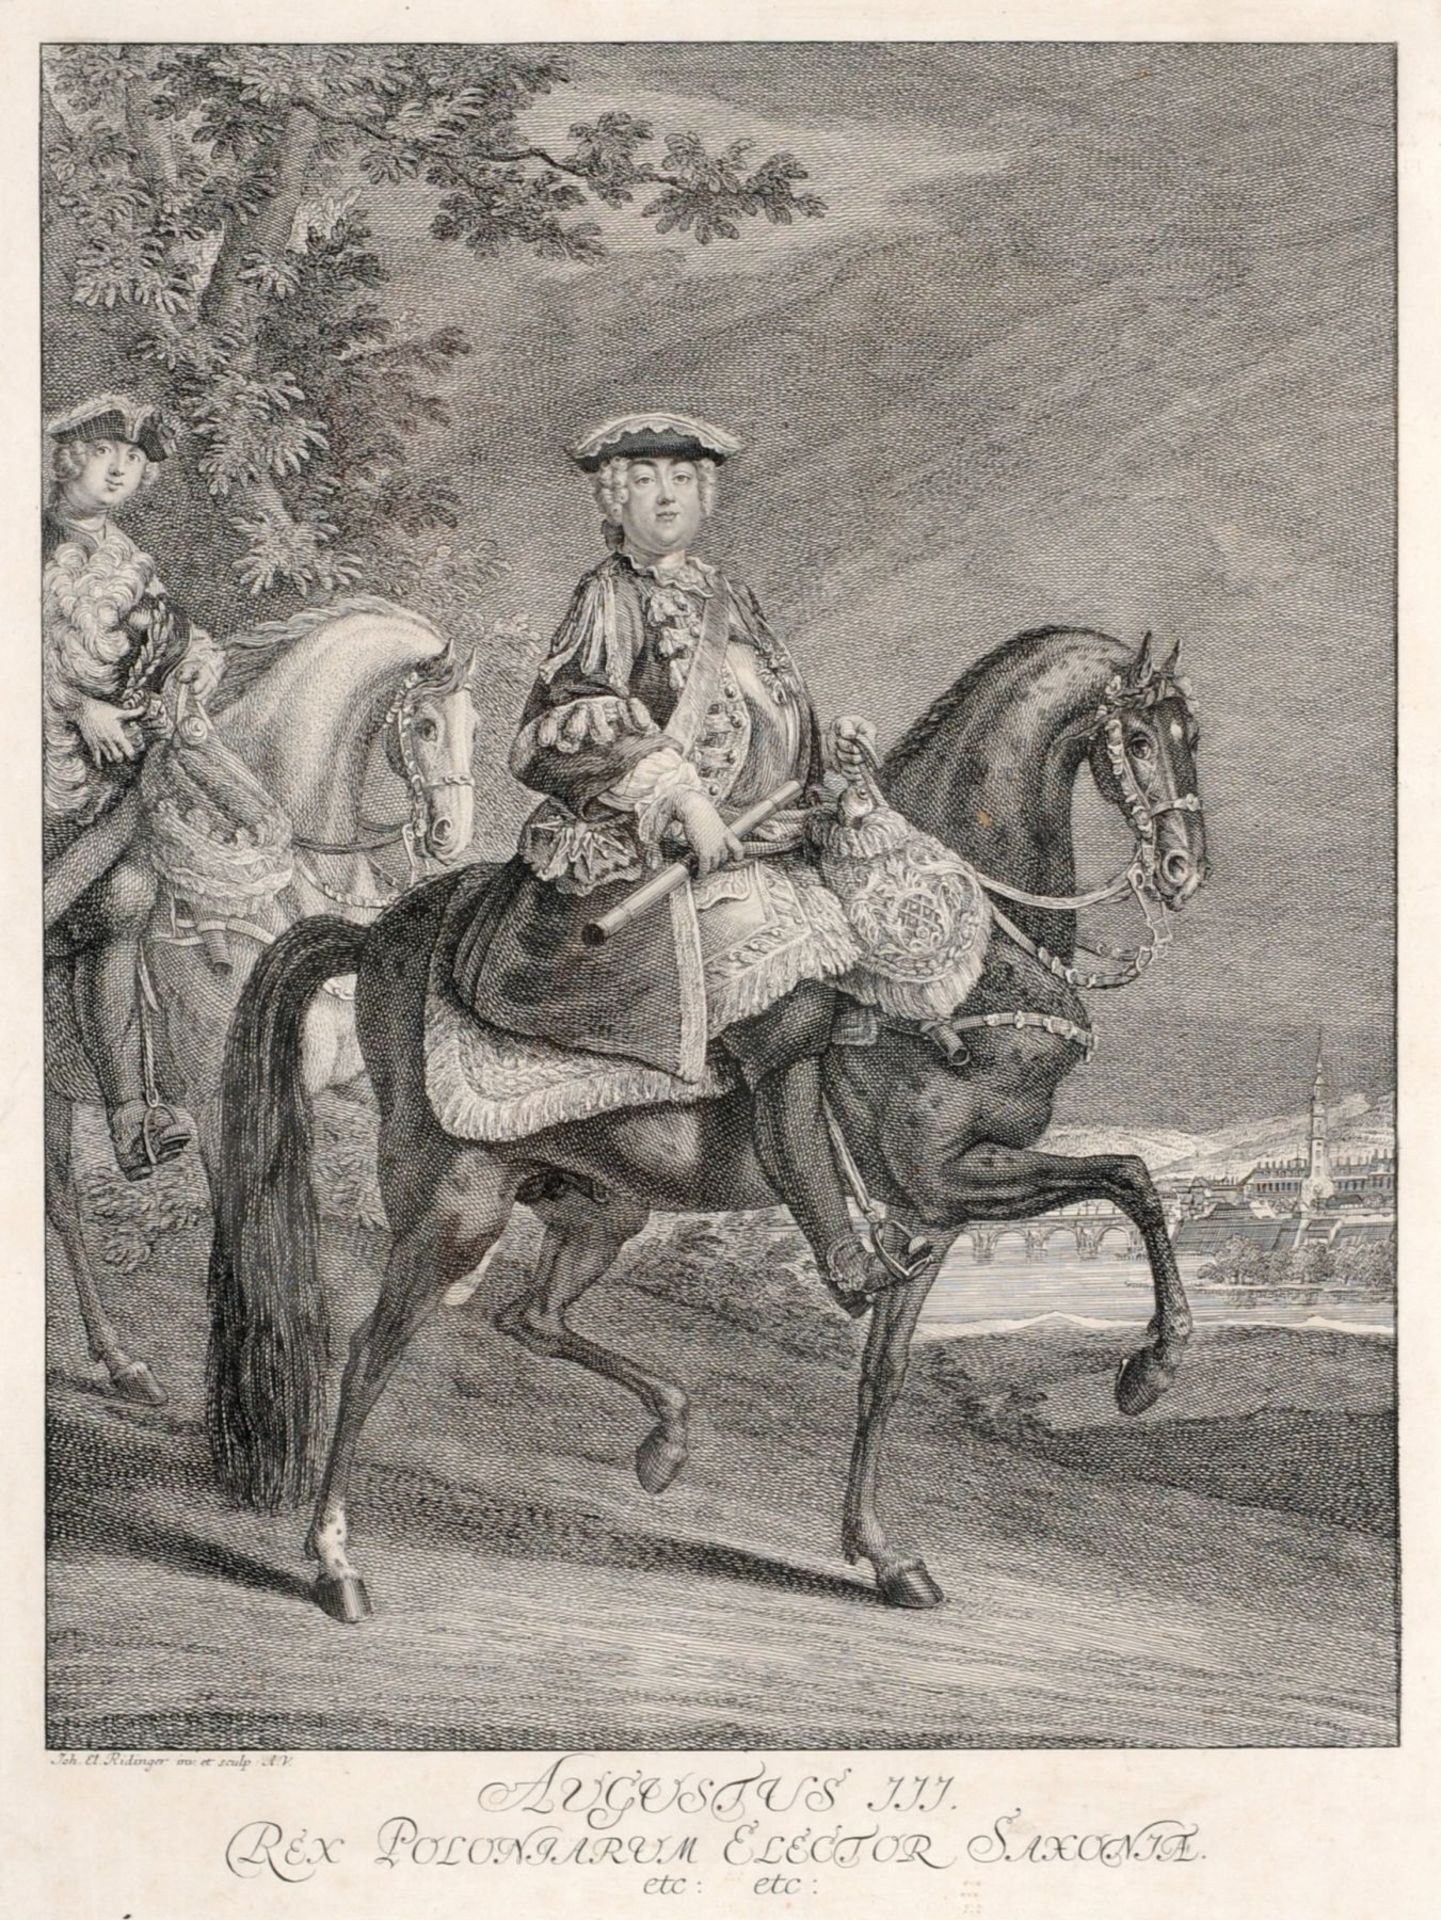 Johann Elias Ridinger "Augustus III. Rex Polonarum Elector Saxonia". Um 1760. Johann Elias